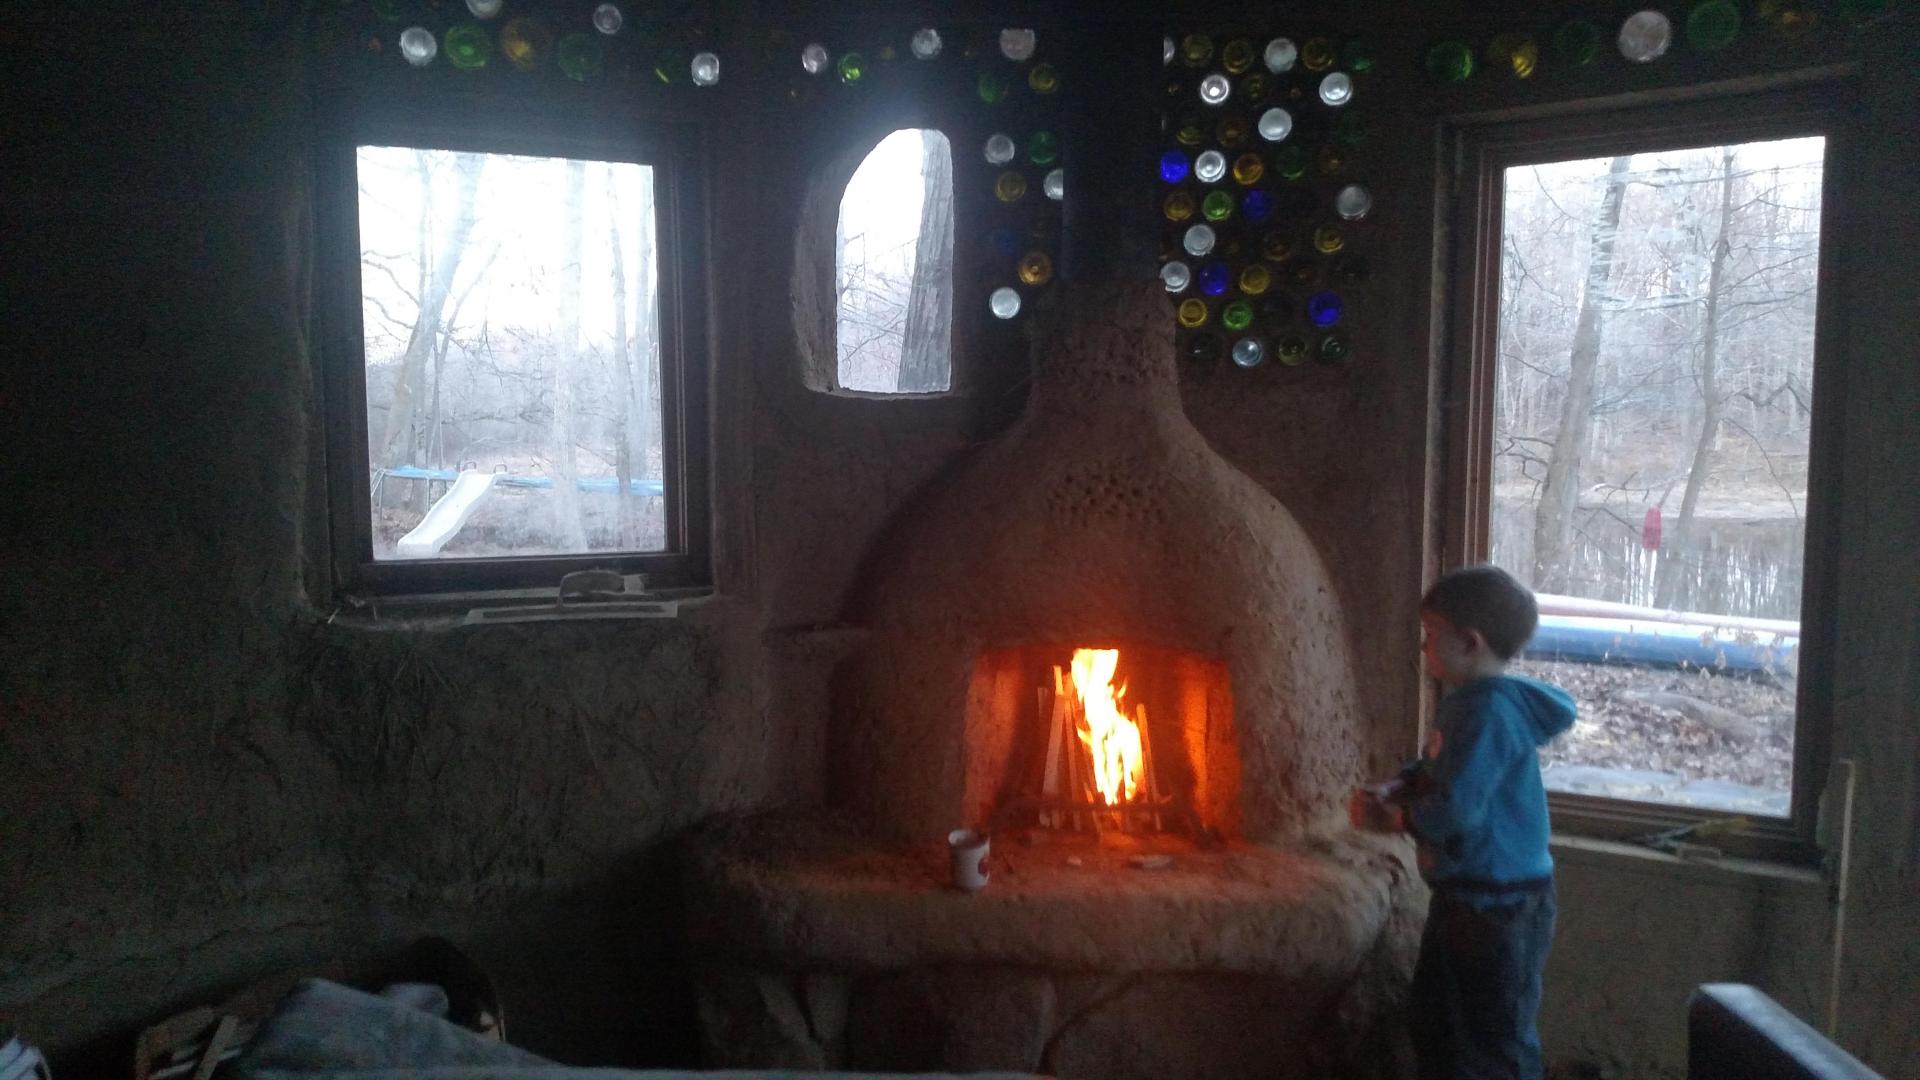 Firing up the Cob Rumford Fireplace